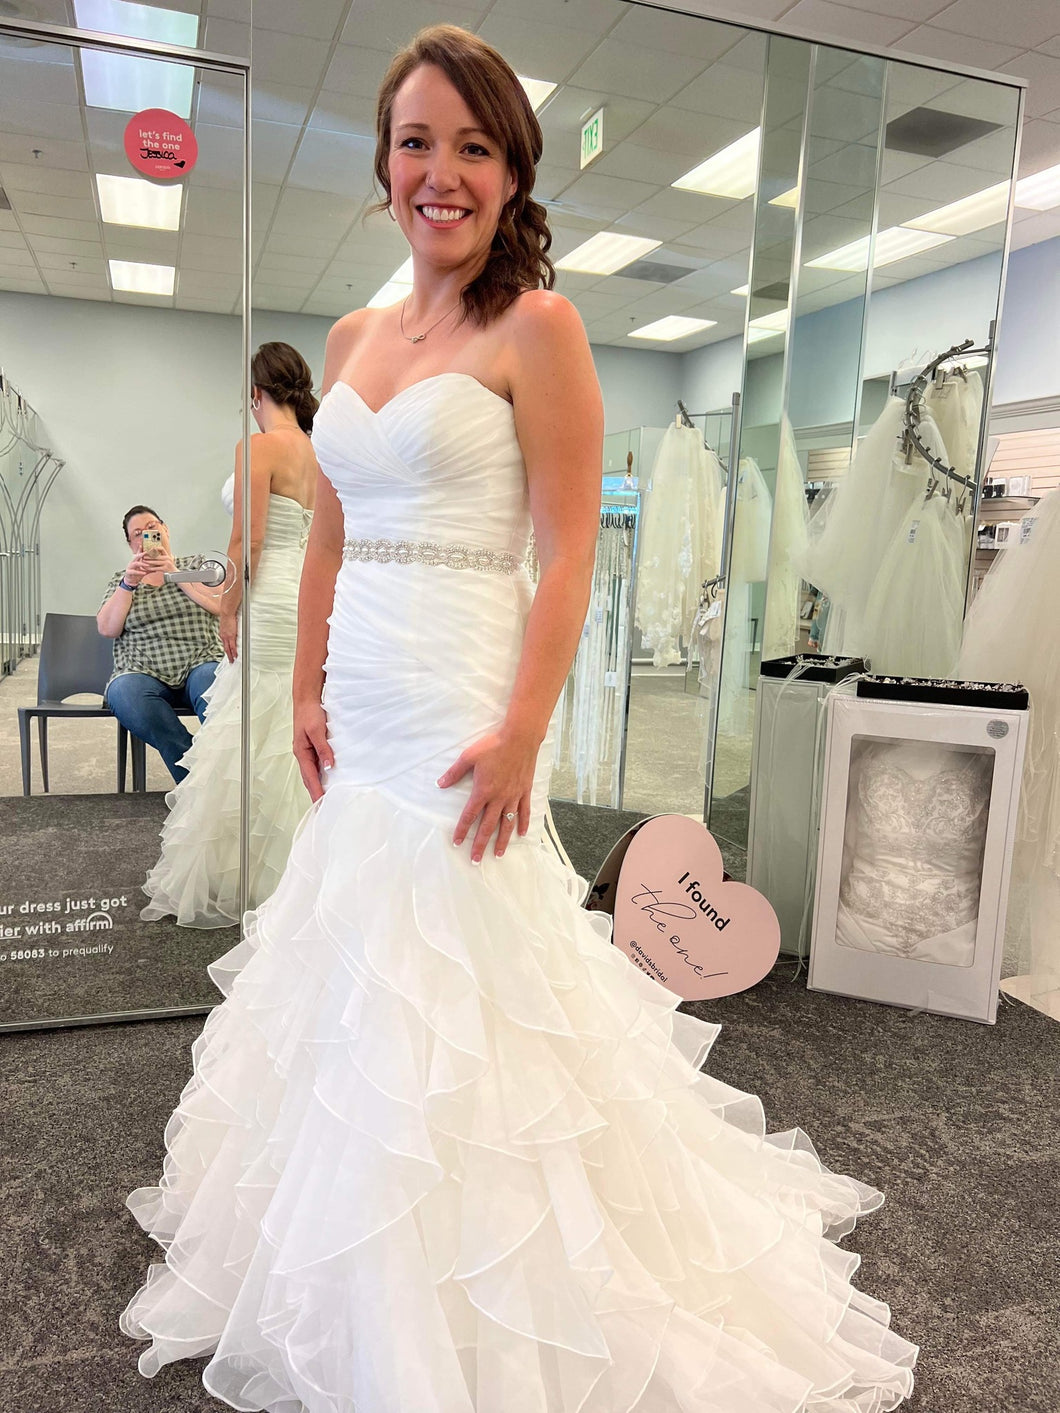 David's Bridal '10012542' wedding dress size-04 NEW